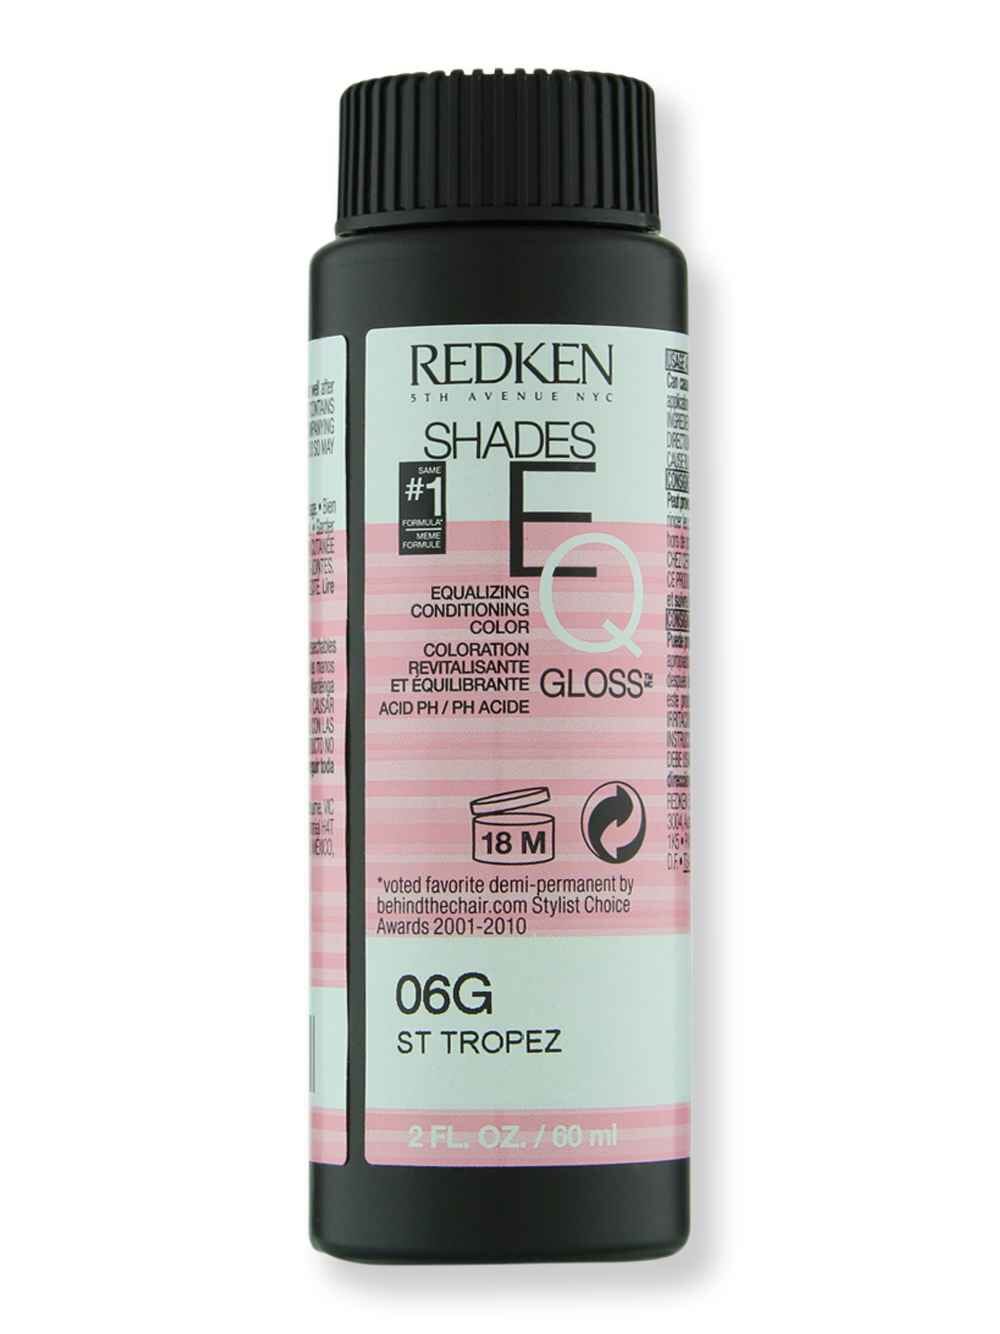 Redken Redken Shades EQ Gloss 2 oz60 ml06G St Tropez Hair Color 